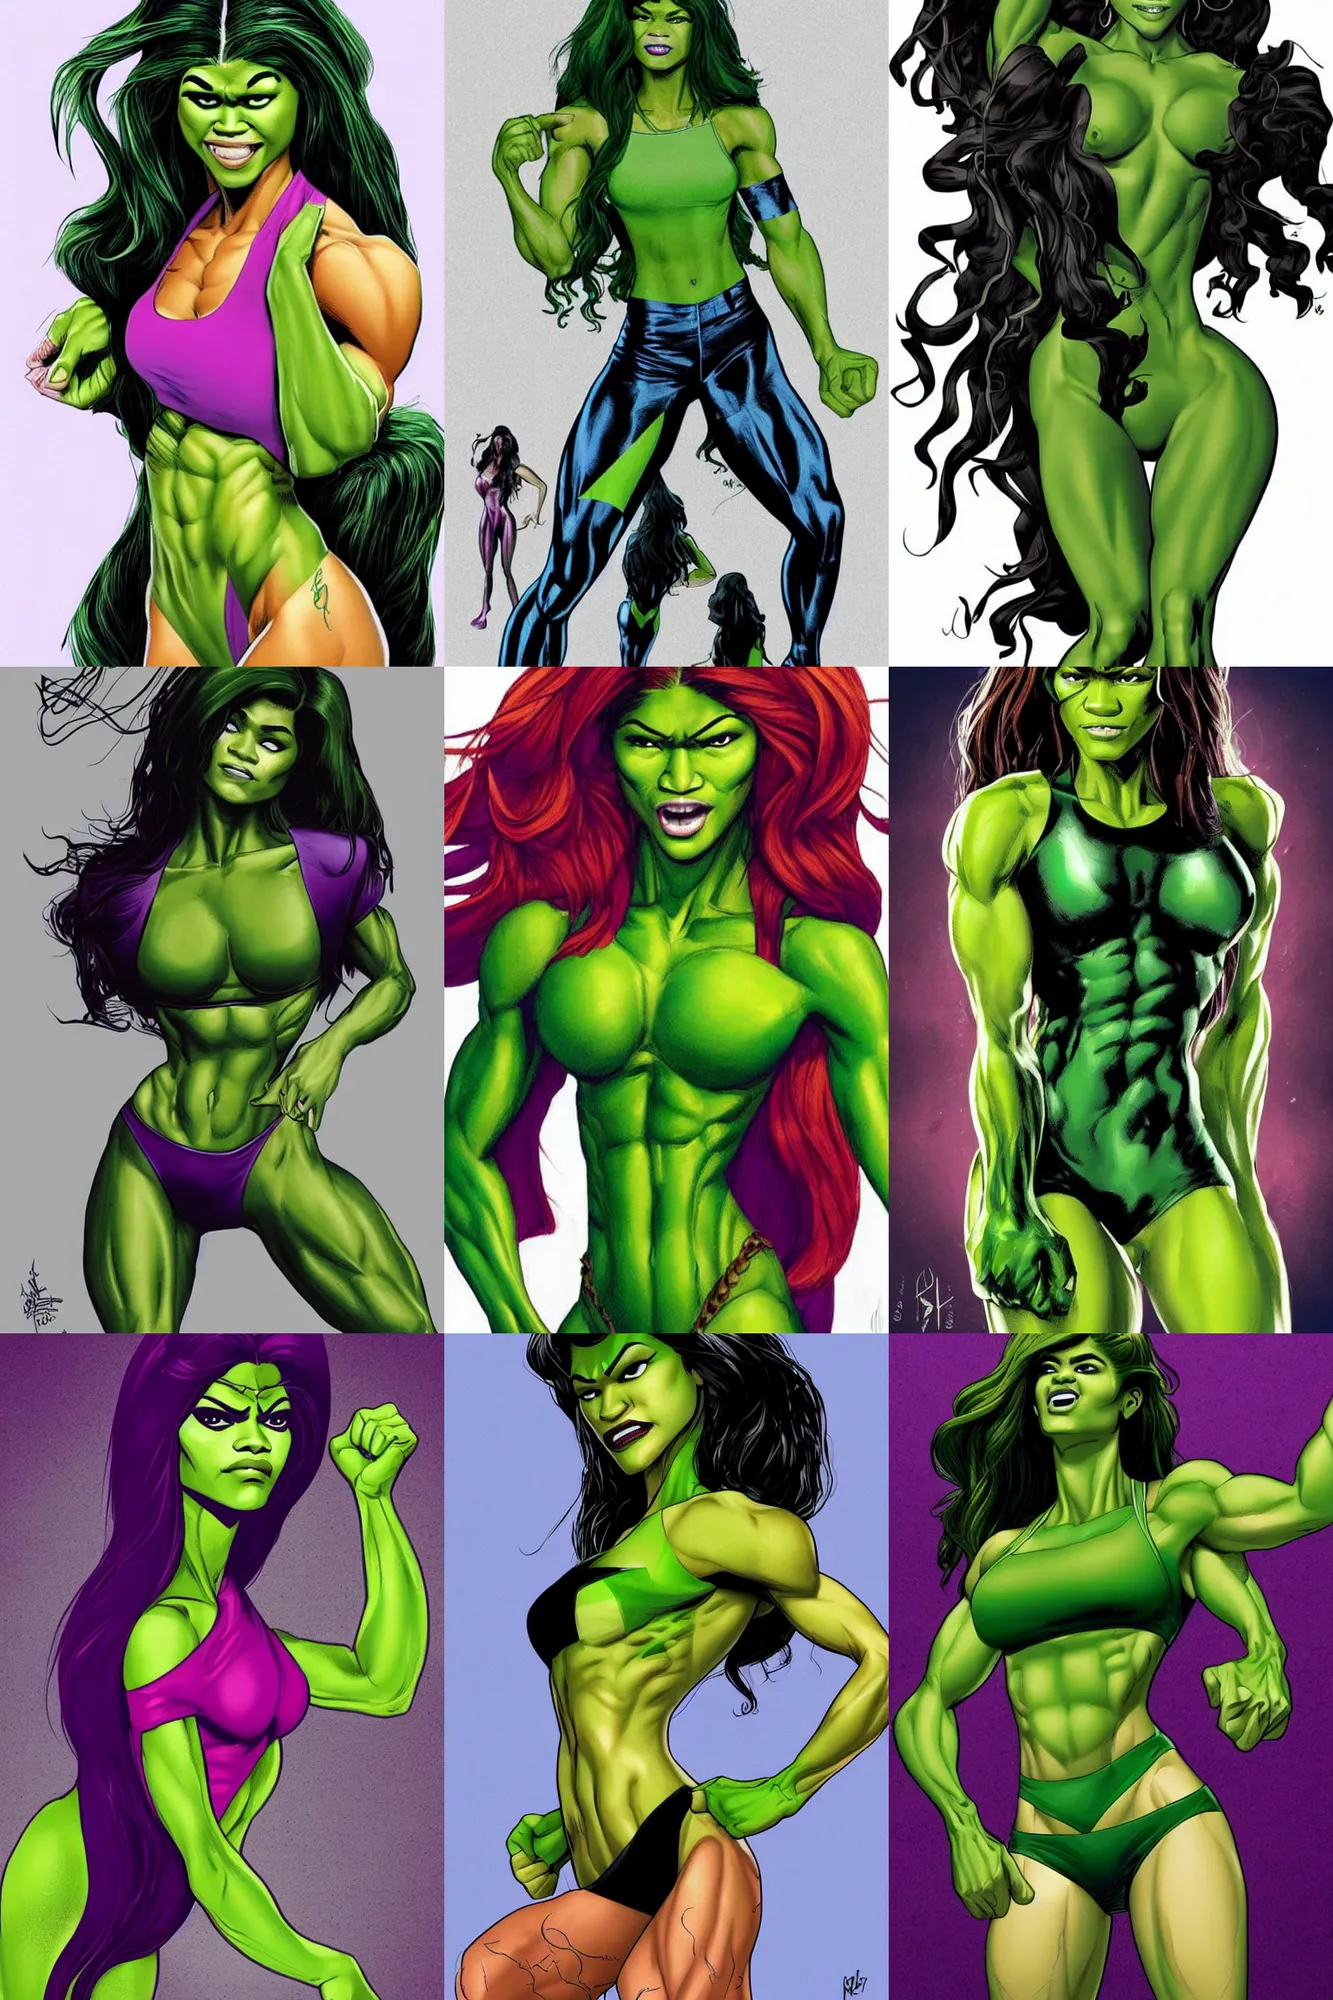 Prompt: Zendaya as She-Hulk, long hair, stunning slender healthy figure, alt cover realistic illustration beautiful